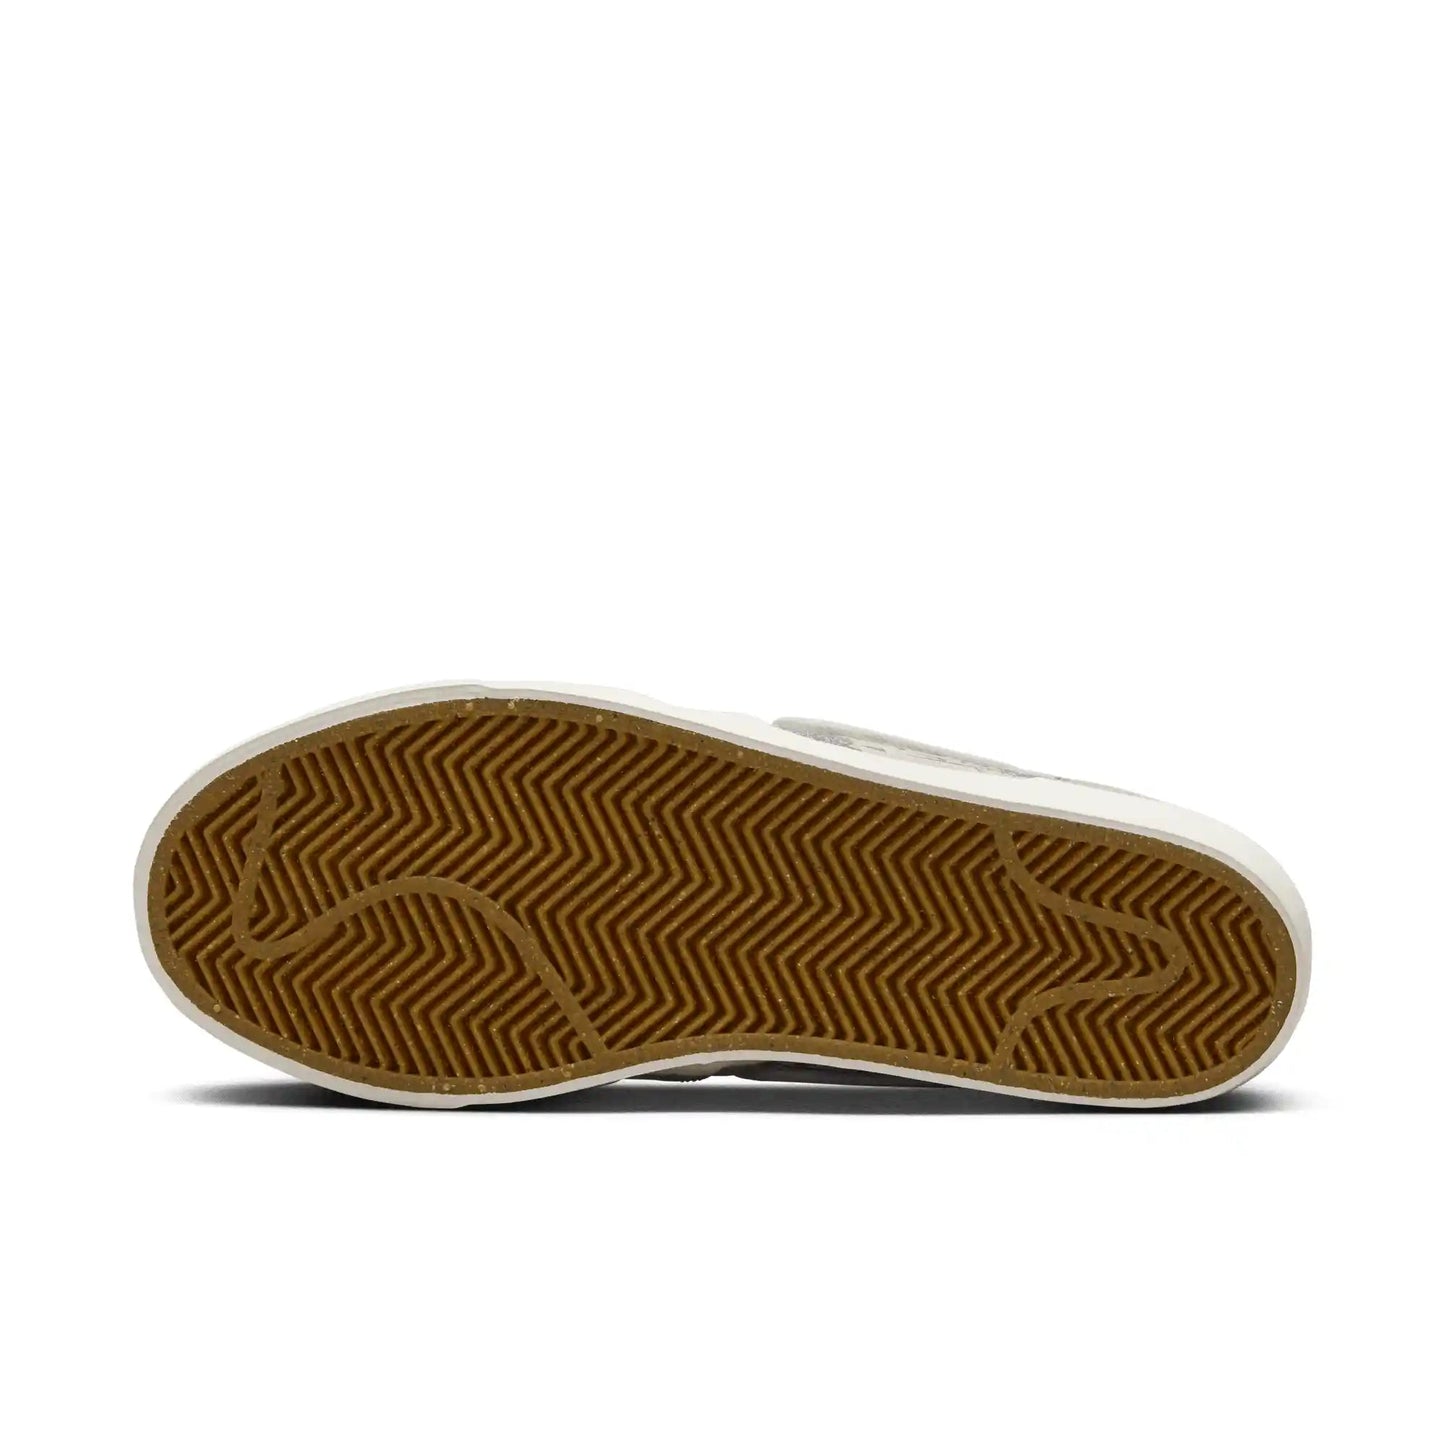 Nike SB Zoom Pogo Plus Premium, sail/light bone - Tiki Room Skateboards - 10